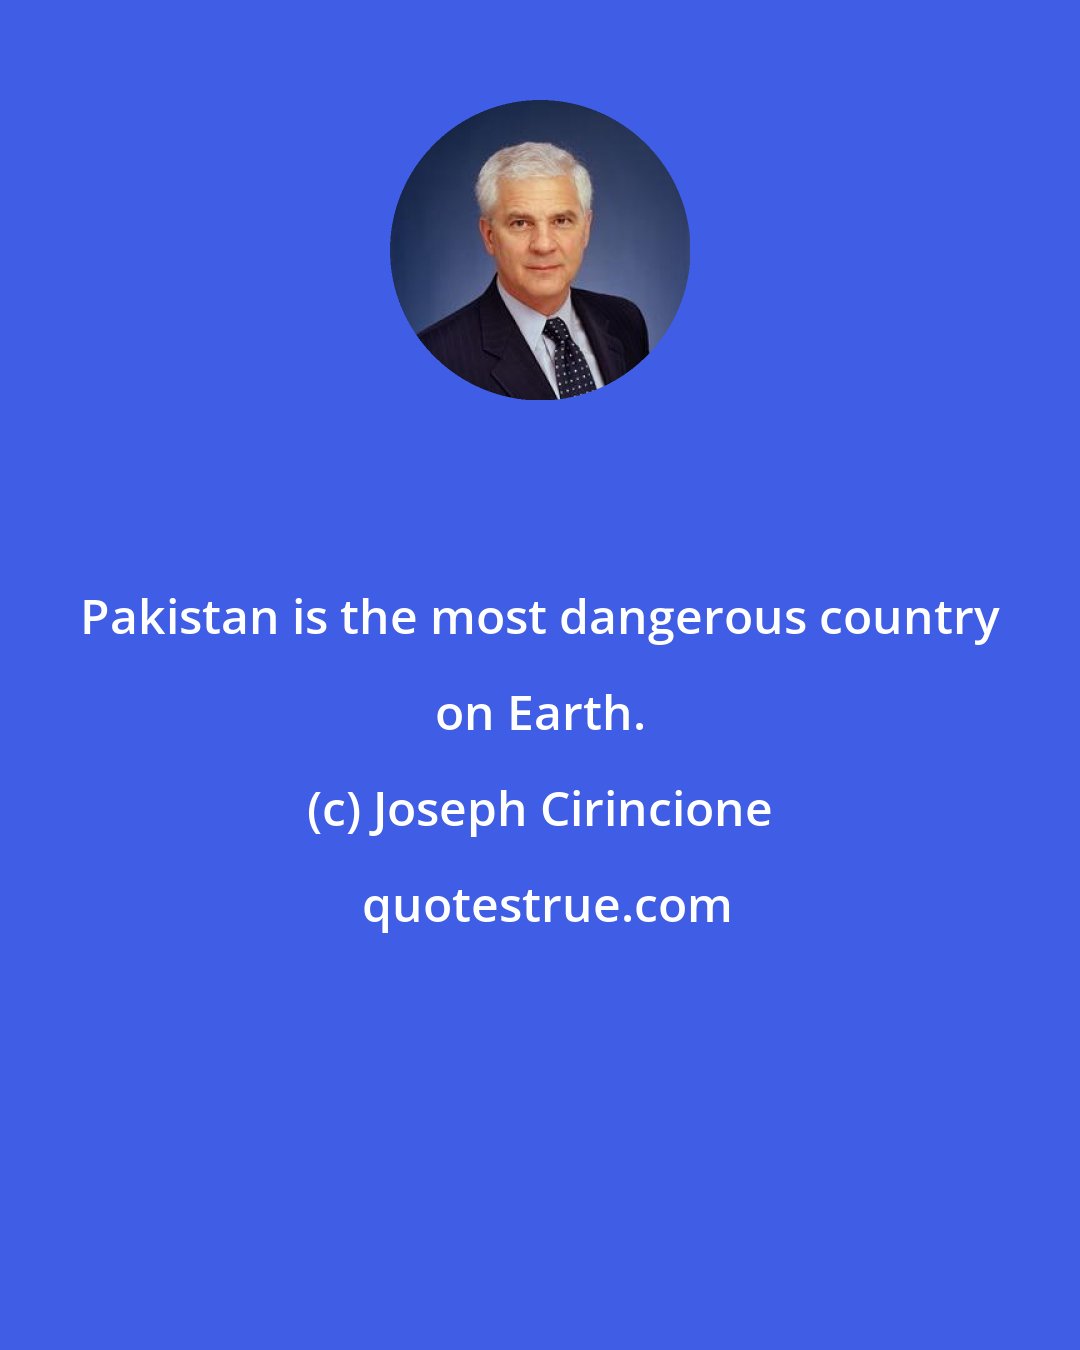 Joseph Cirincione: Pakistan is the most dangerous country on Earth.